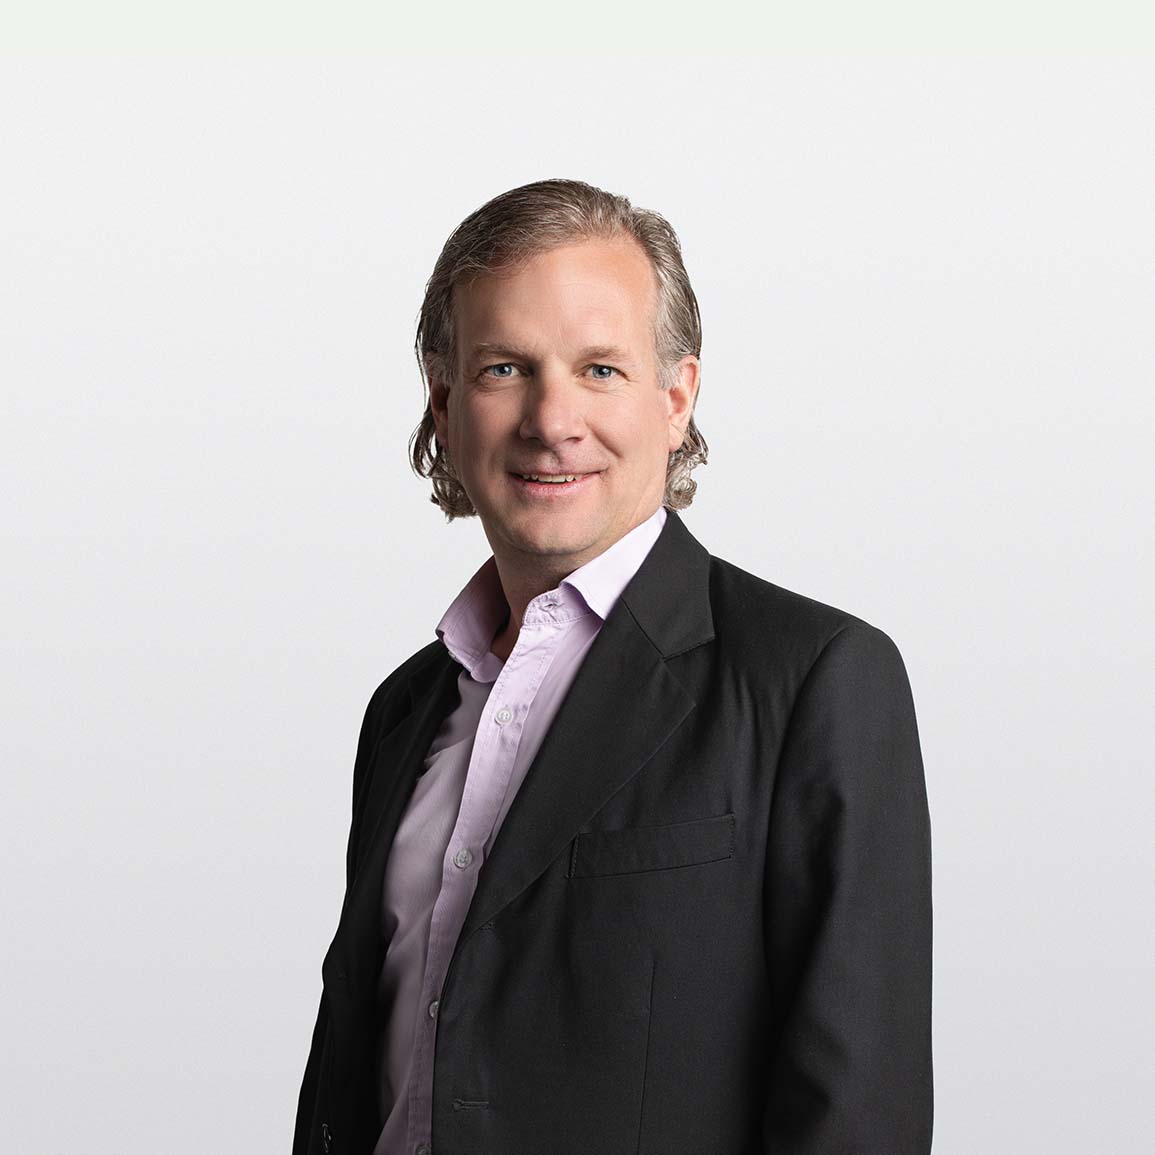 Image of Darin Gyug senior financial advisor on white background